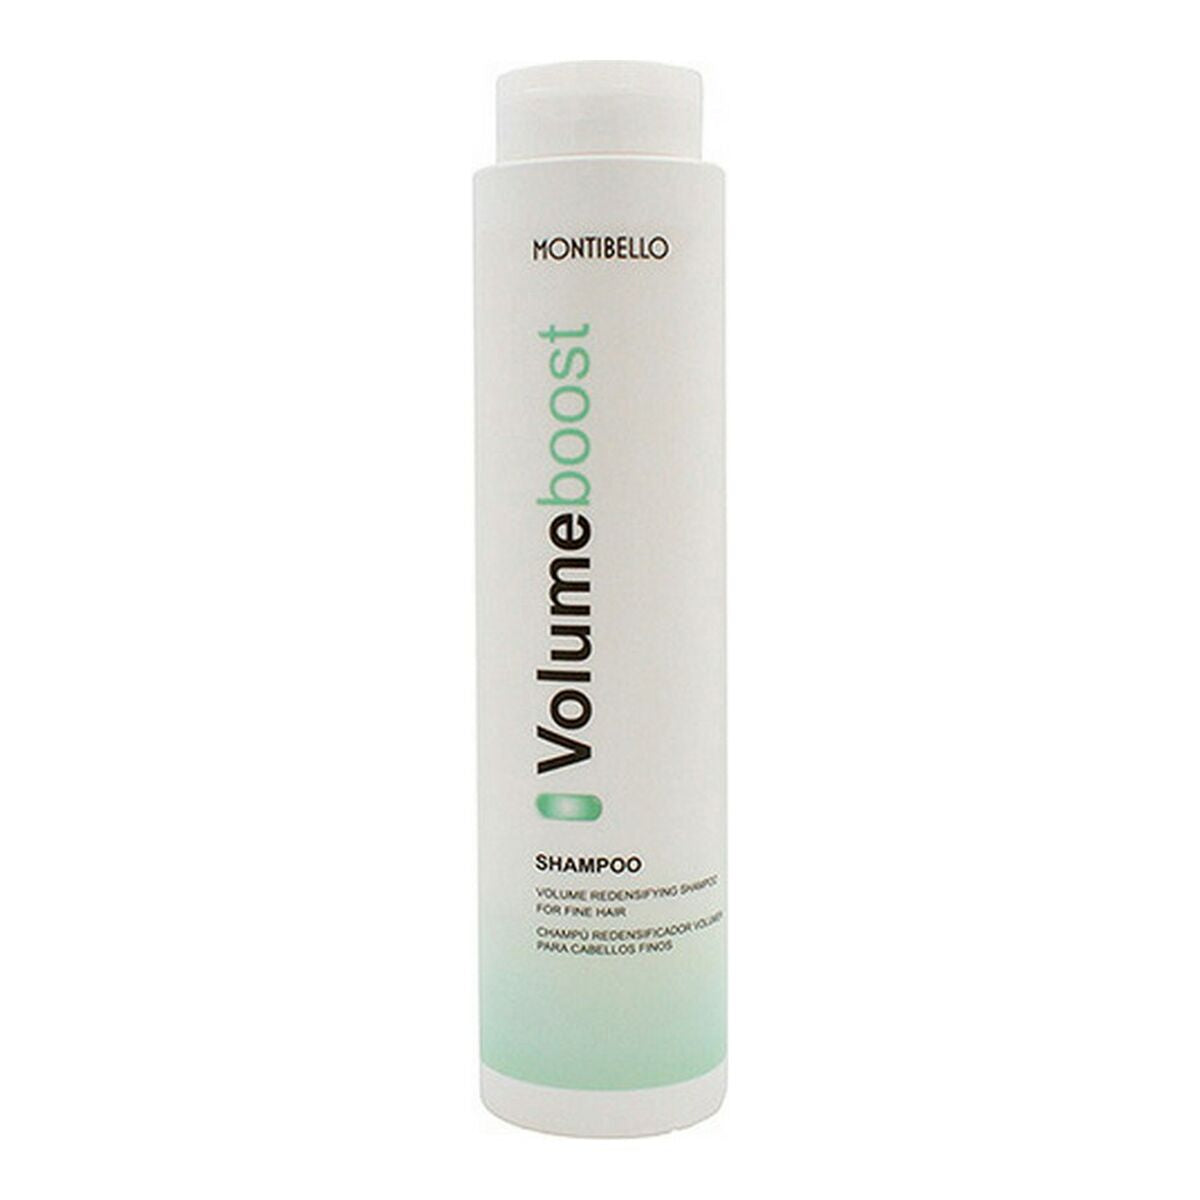 Volumengebendes Shampoo Montibello